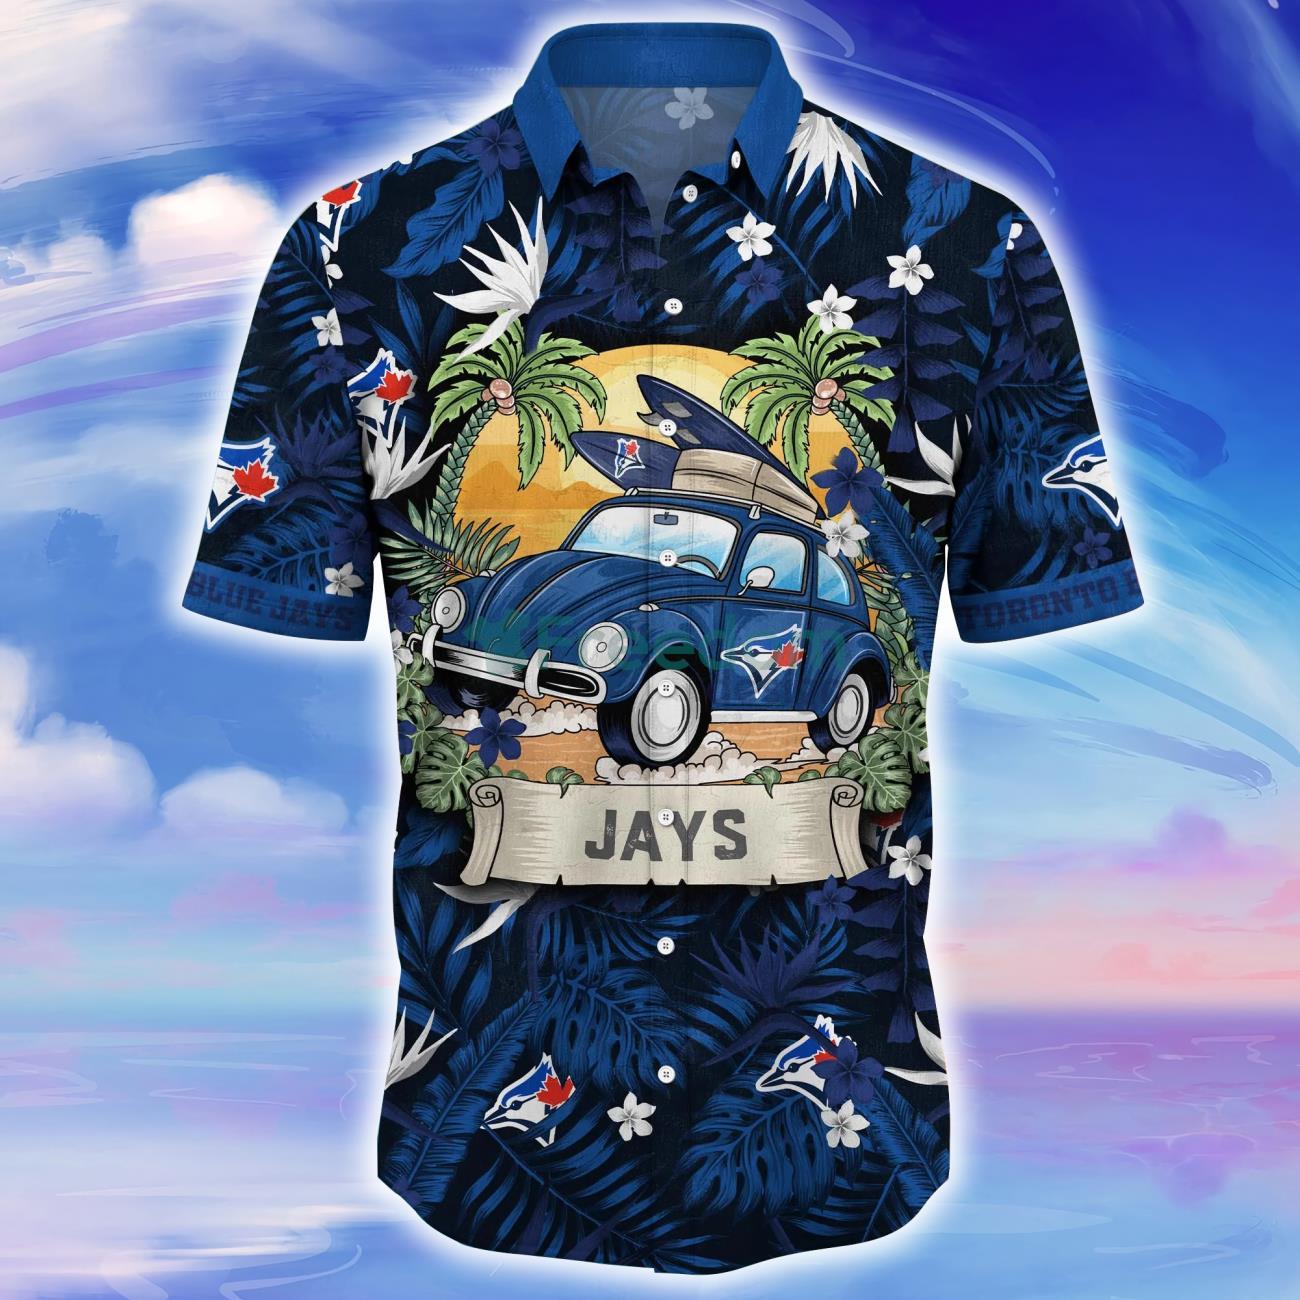 Toronto Blue Jays MLB Flower Hawaiian Shirt Unique Gift For Men Women Fans  - Freedomdesign